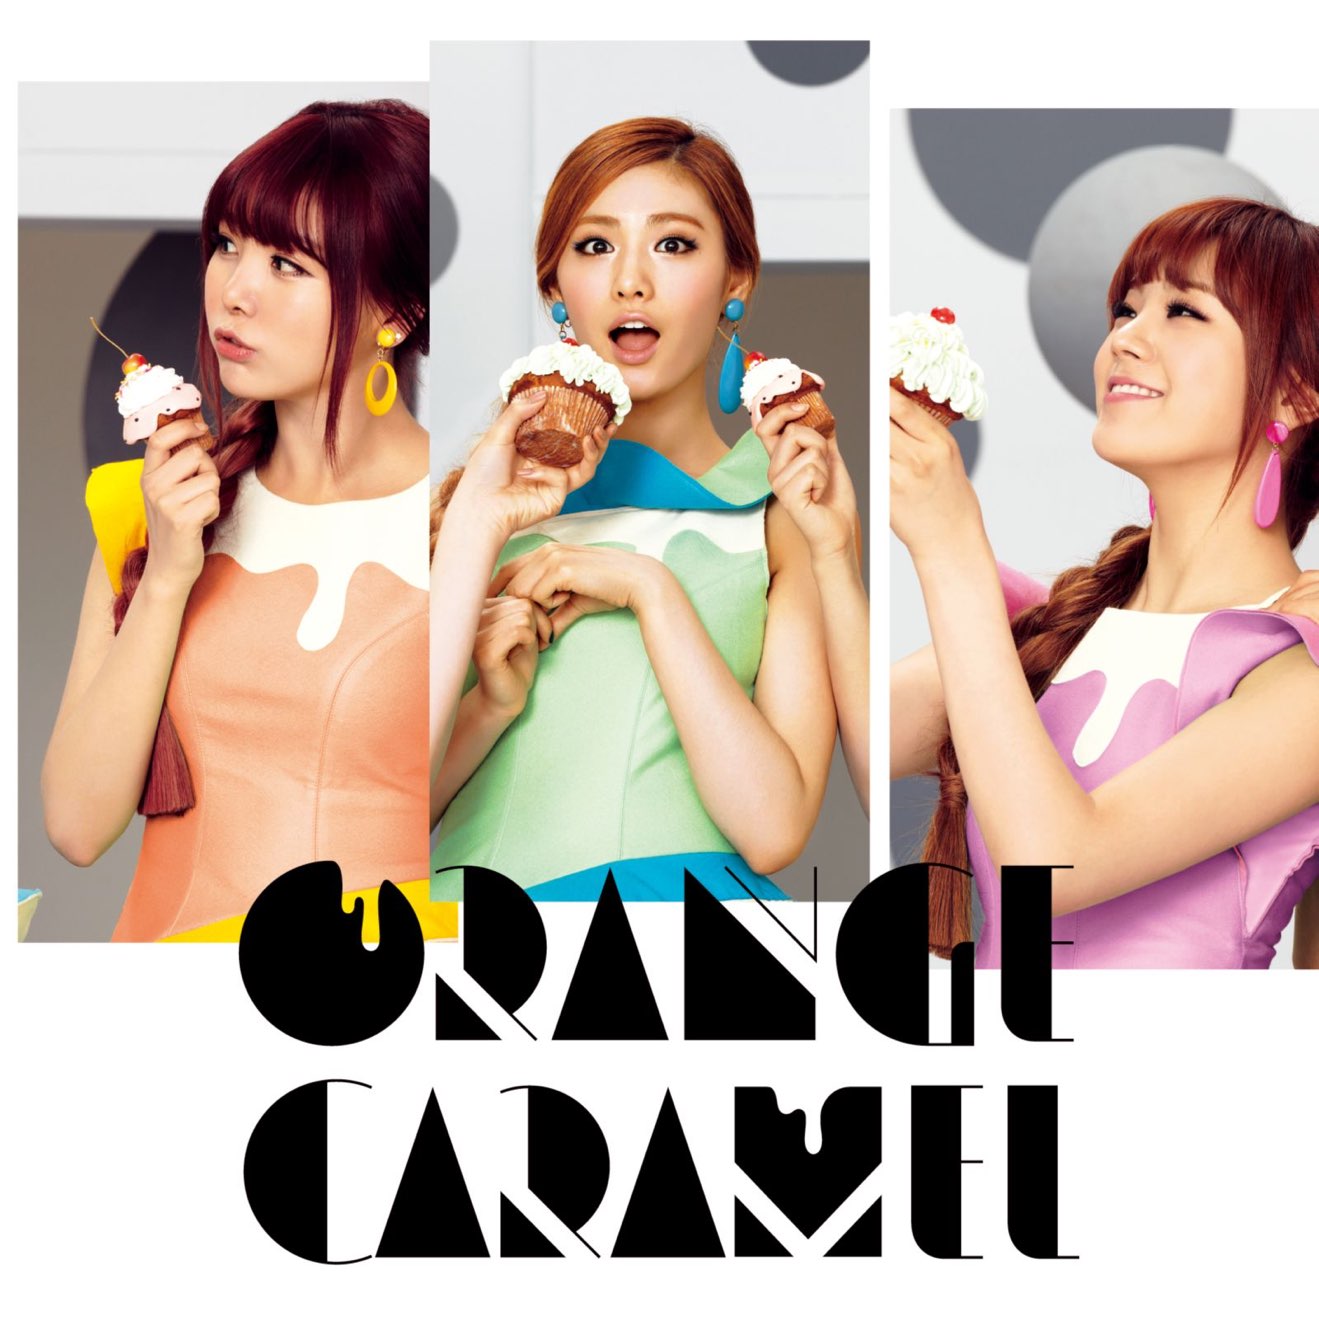 Orange Caramel – Orange Caramel (2013) [iTunes Match M4A]